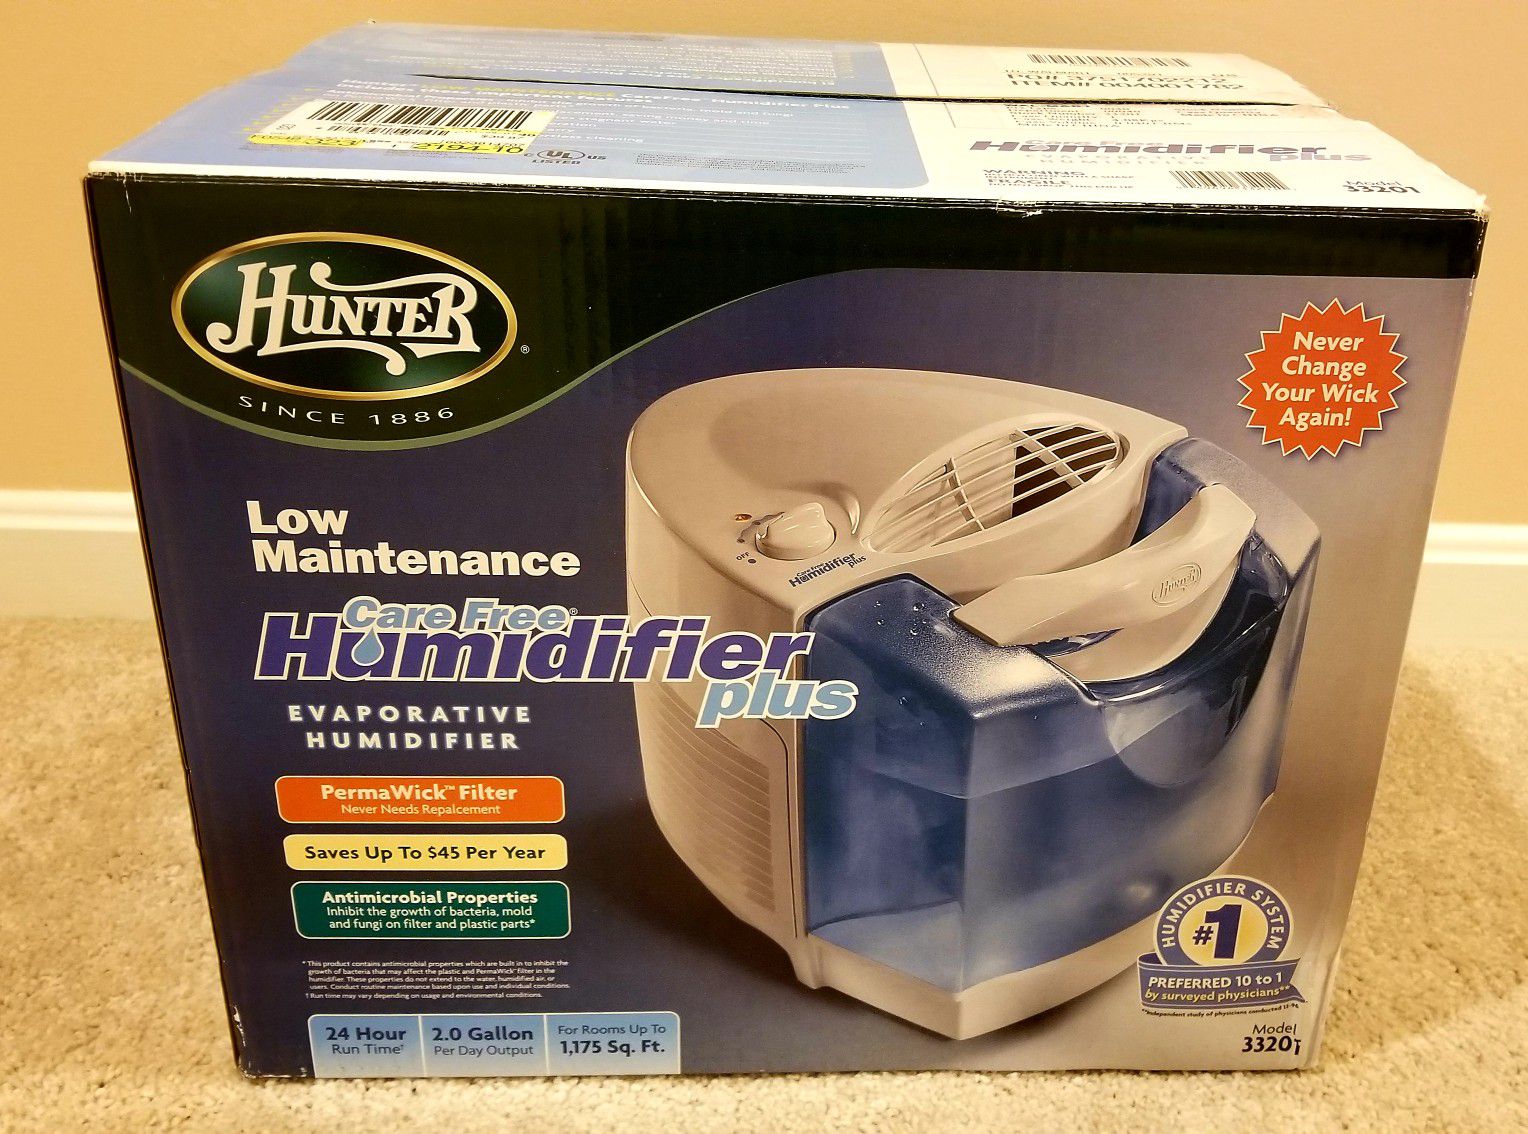 Humidifier 2 gallon Like New in Box